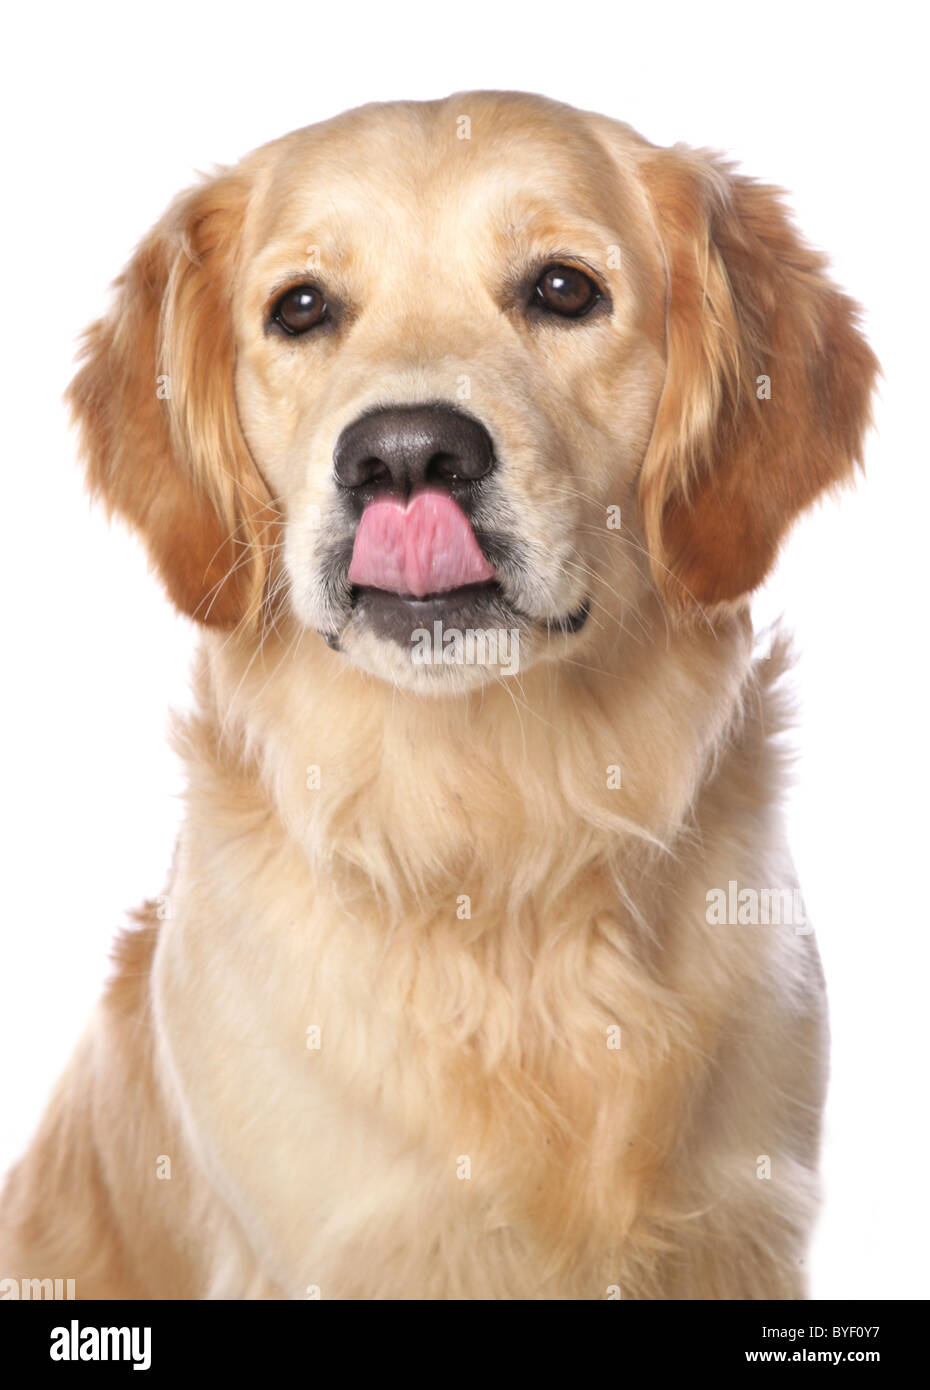 golden retriever poking tongue out licking nose head shot studio Stock Photo